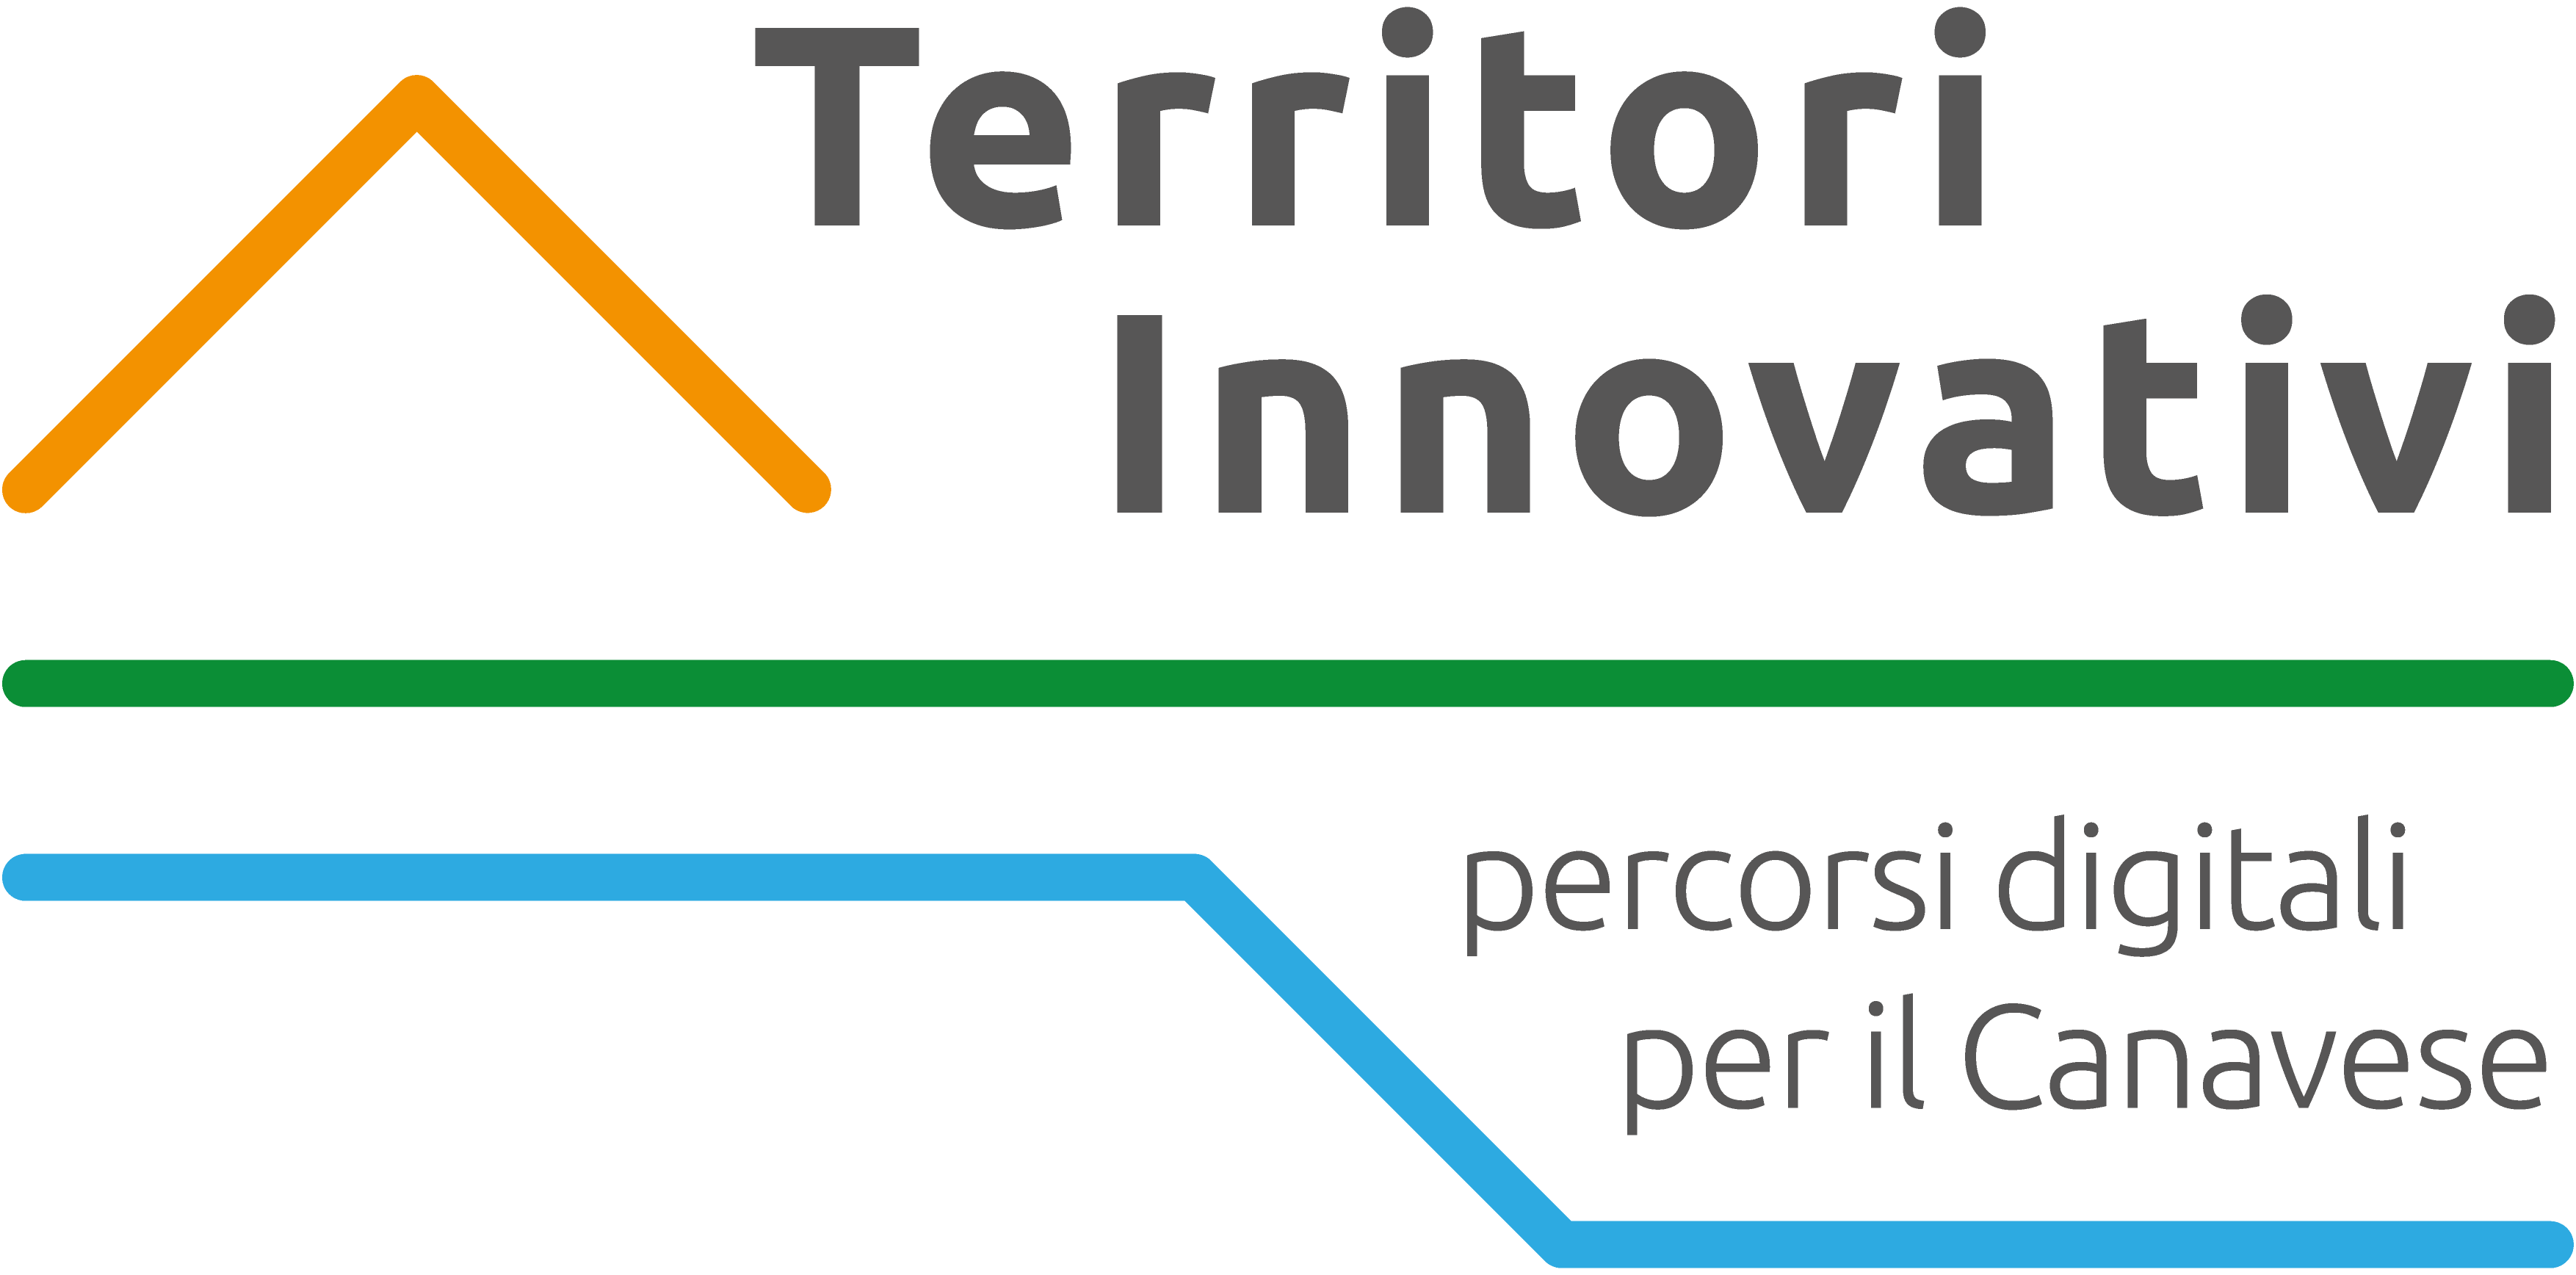 Territori innovativi